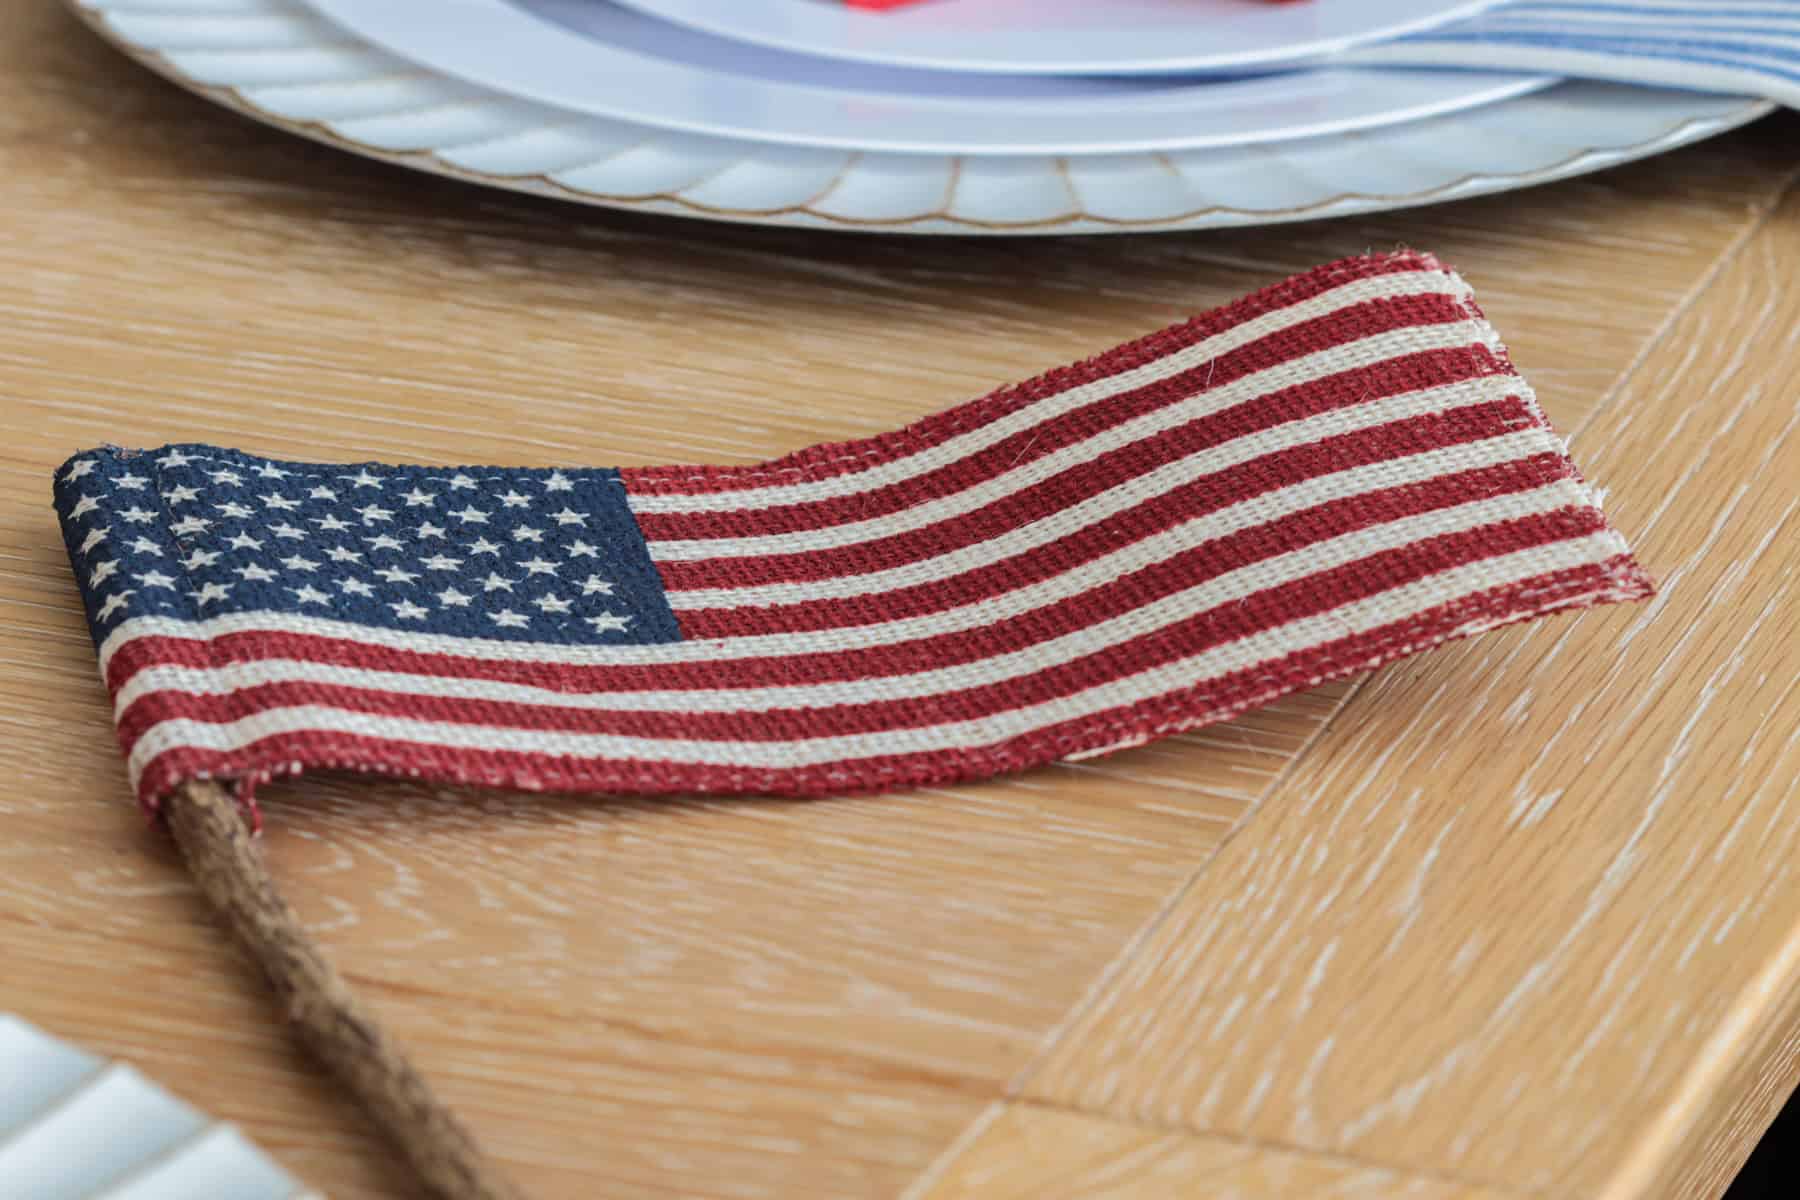 American flag on table.